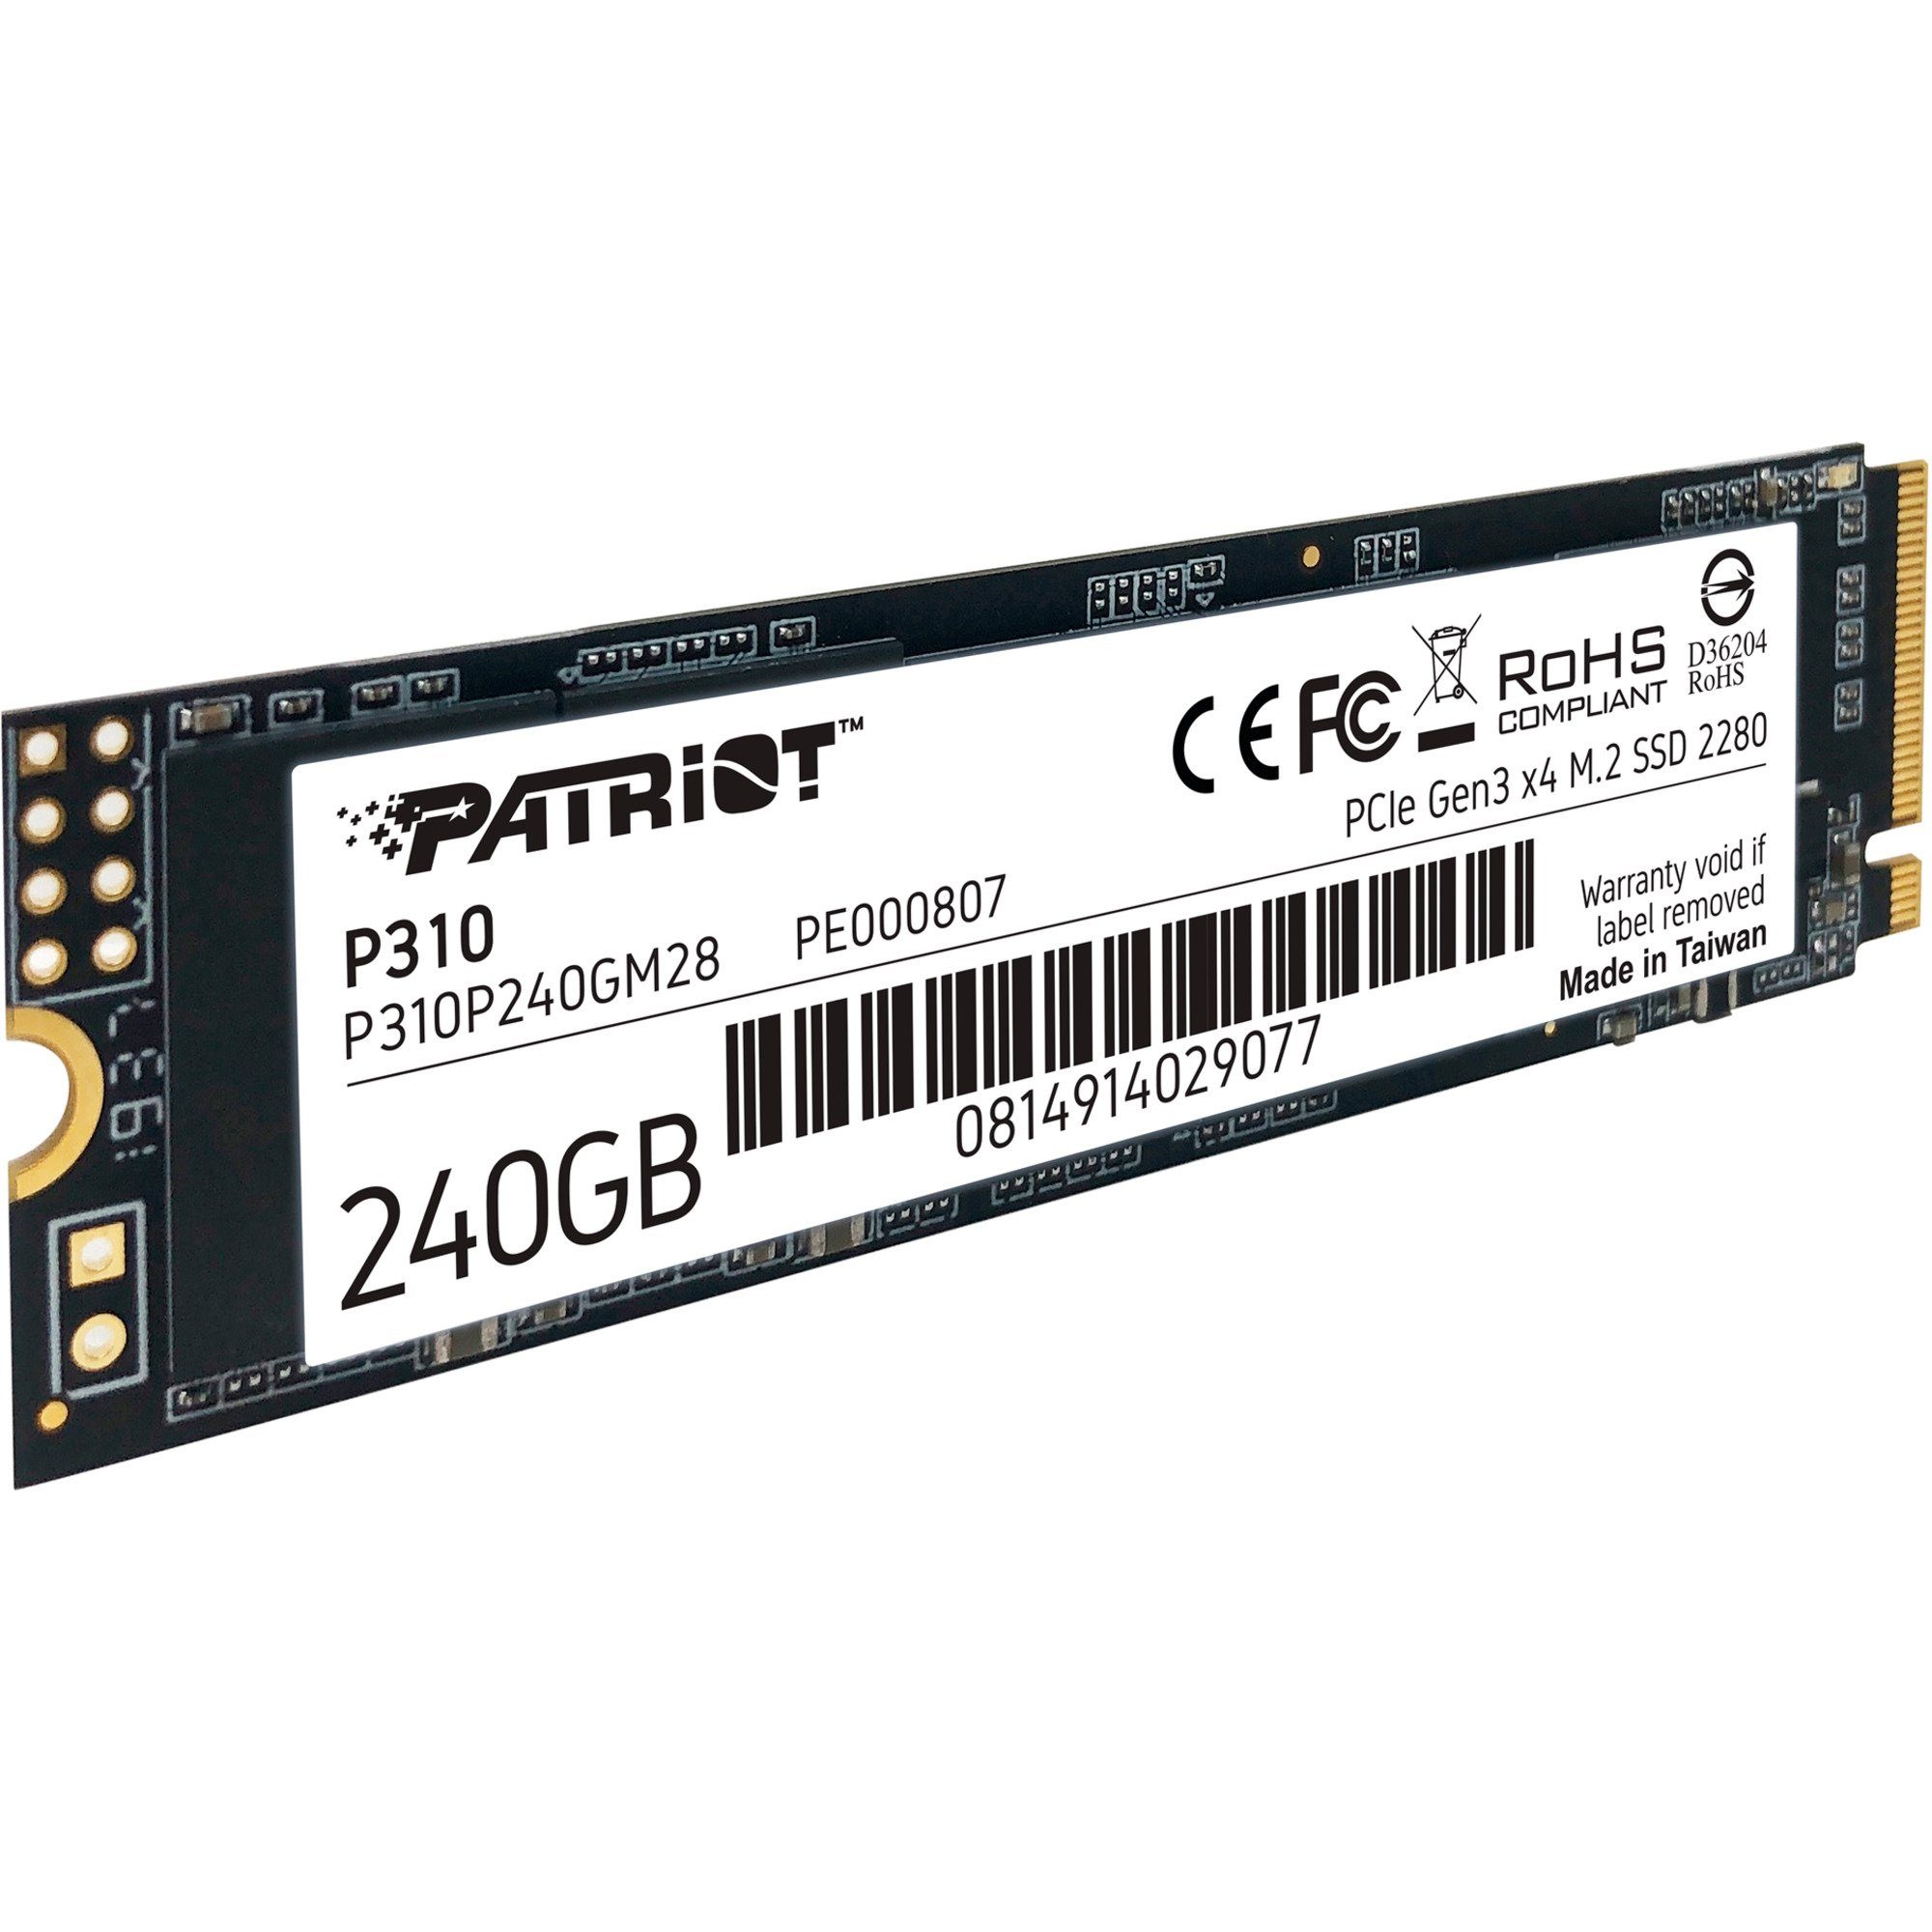 Patriot P310 240 GB SSD-Festplatte (240 GB) Steckkarte"